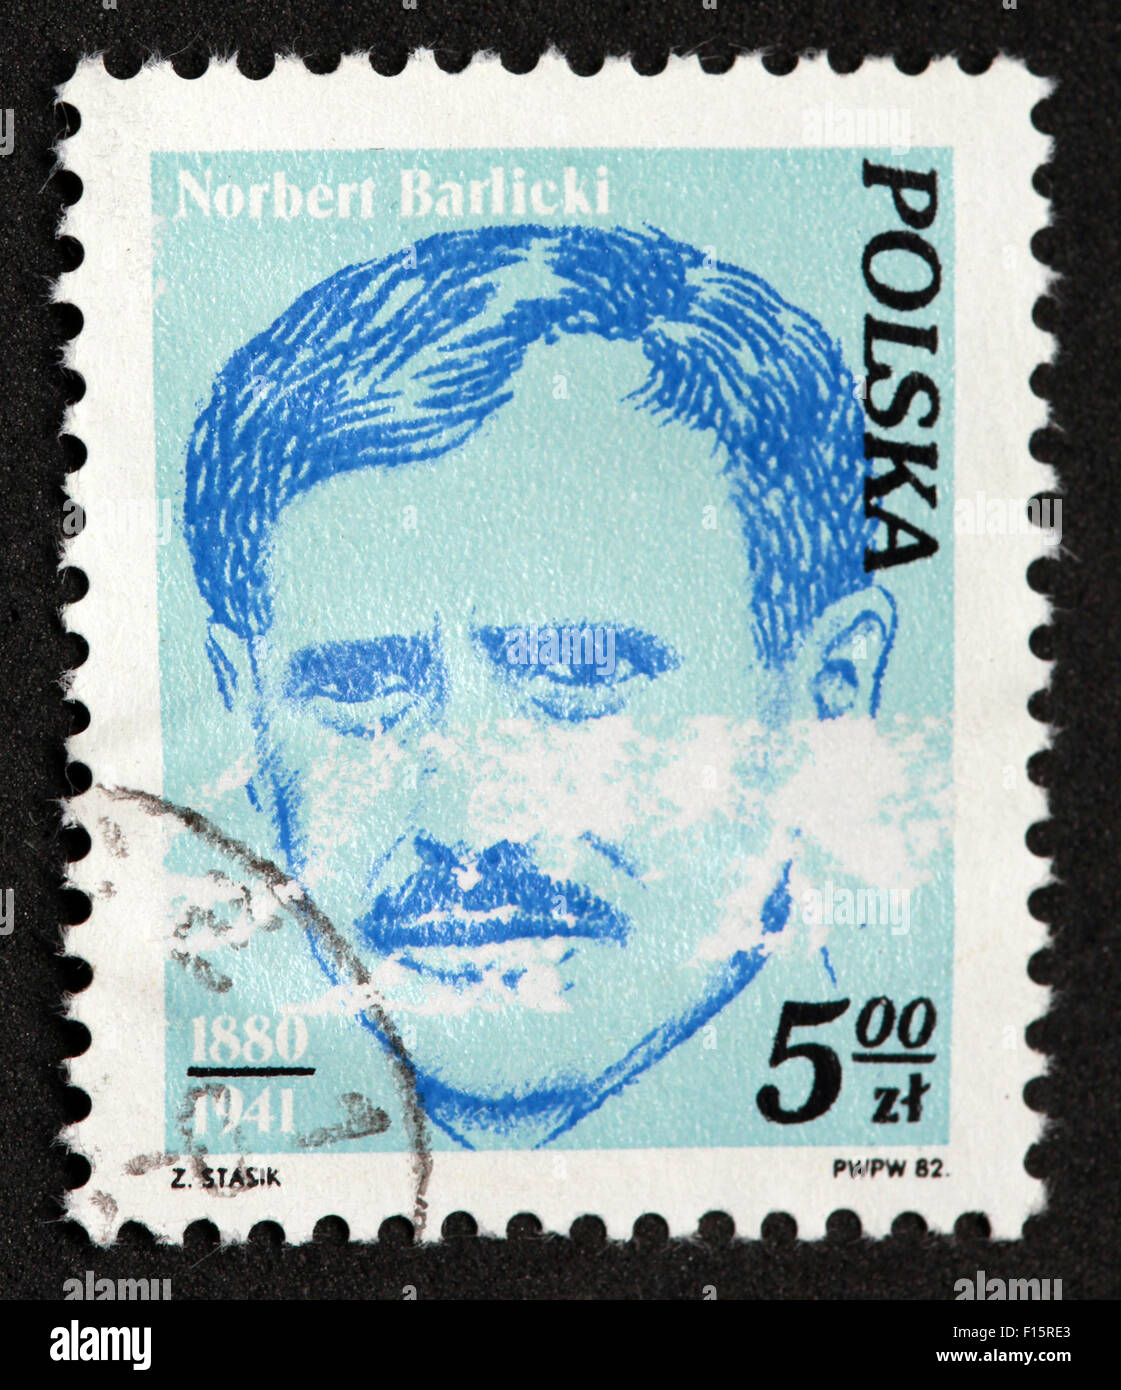 Polska 5.00zt Norbert Barlicki 1880-1941 timbro Foto Stock